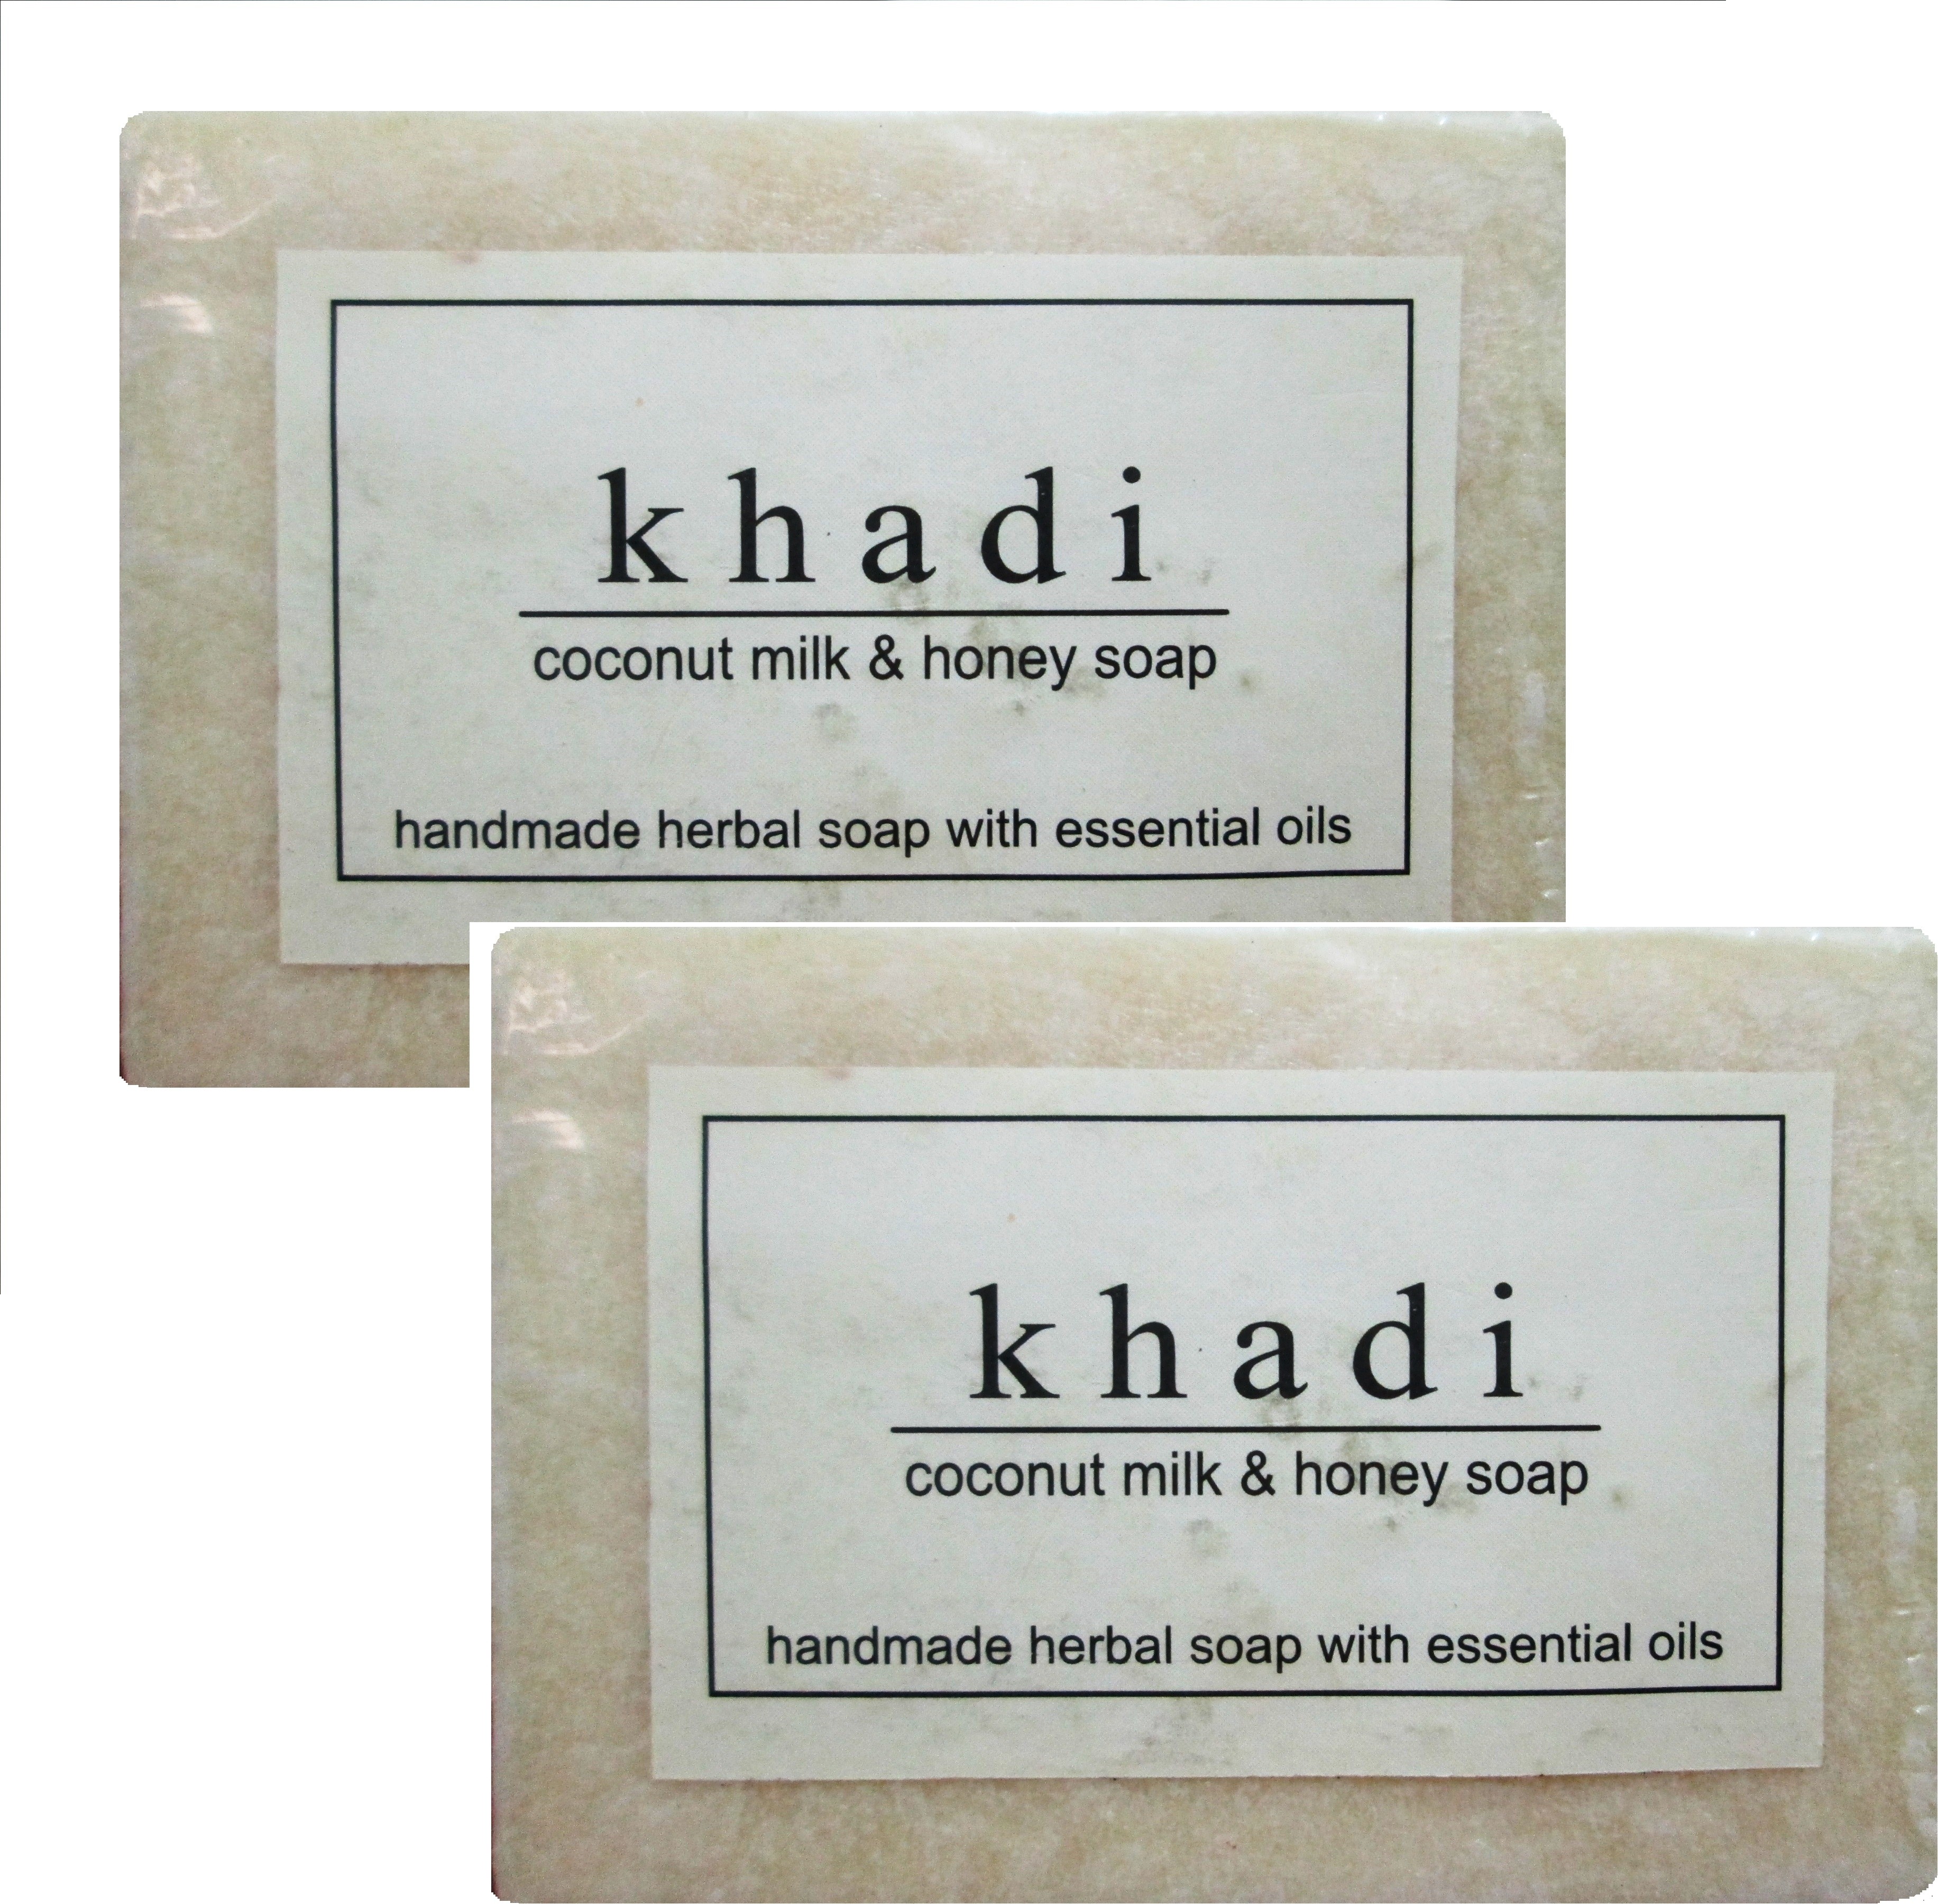 khadi-250-coconut-milk-honey-soap-original-imadptfqcxurwyvx